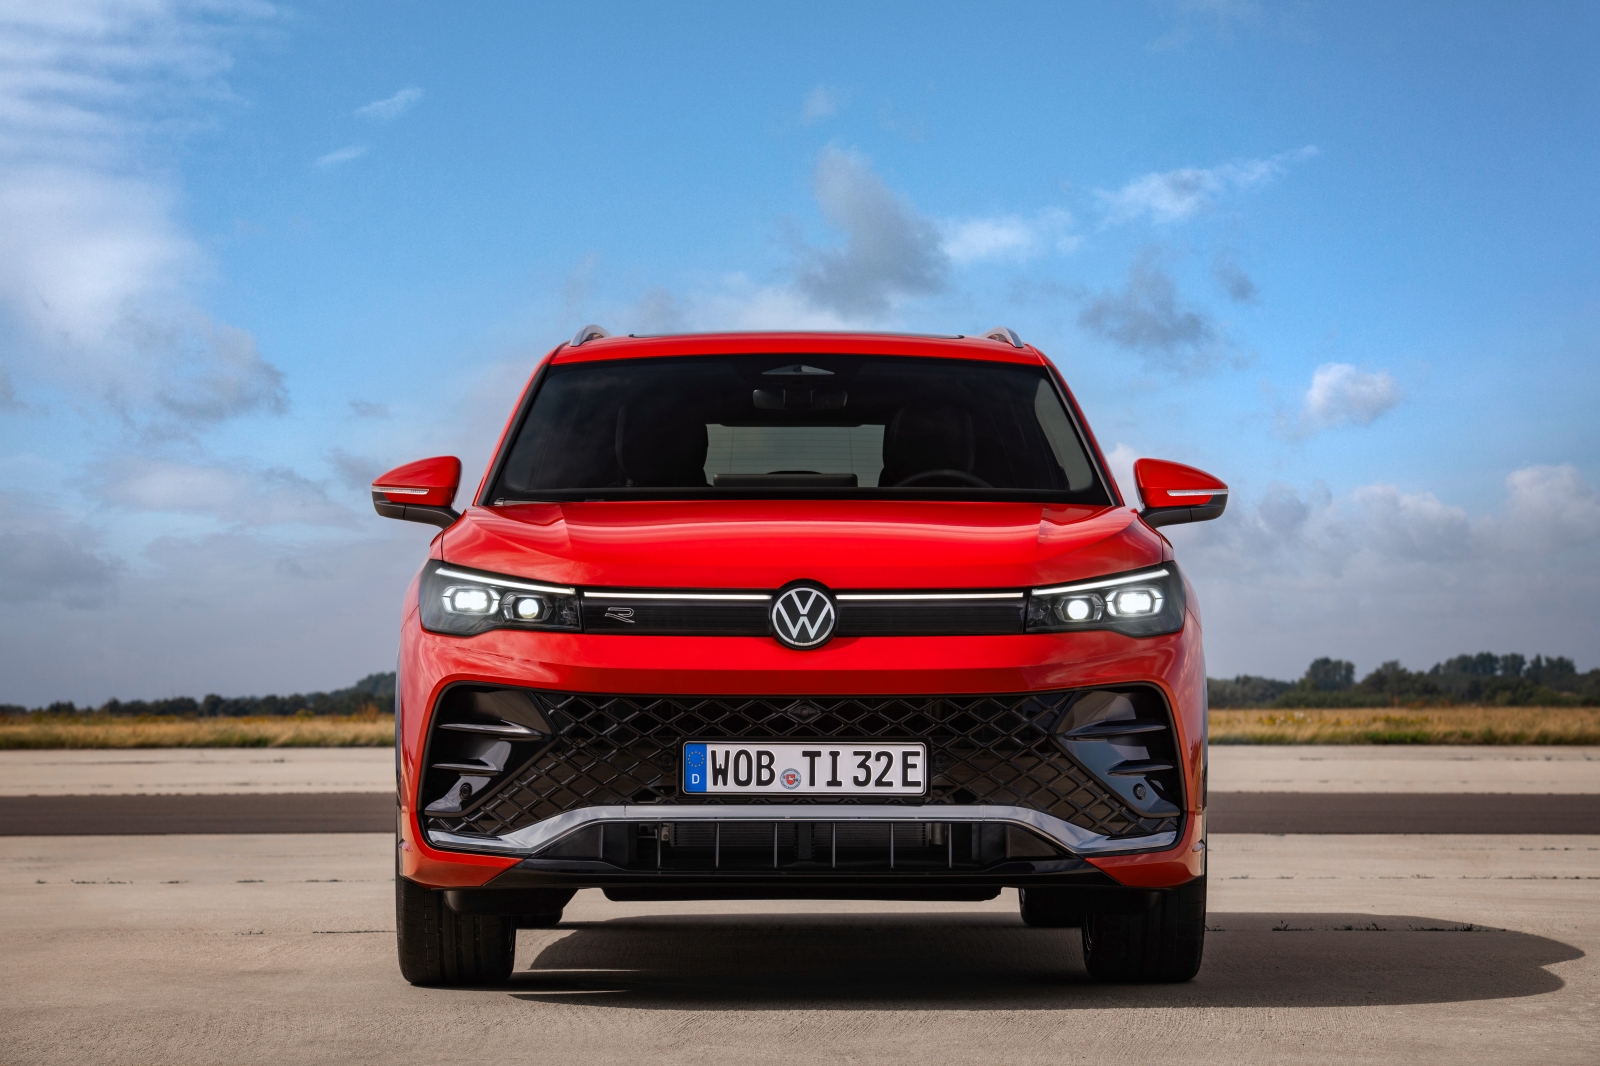 Volkswagen Tiguan : c'est reparti pour un tour - autopanorama.info